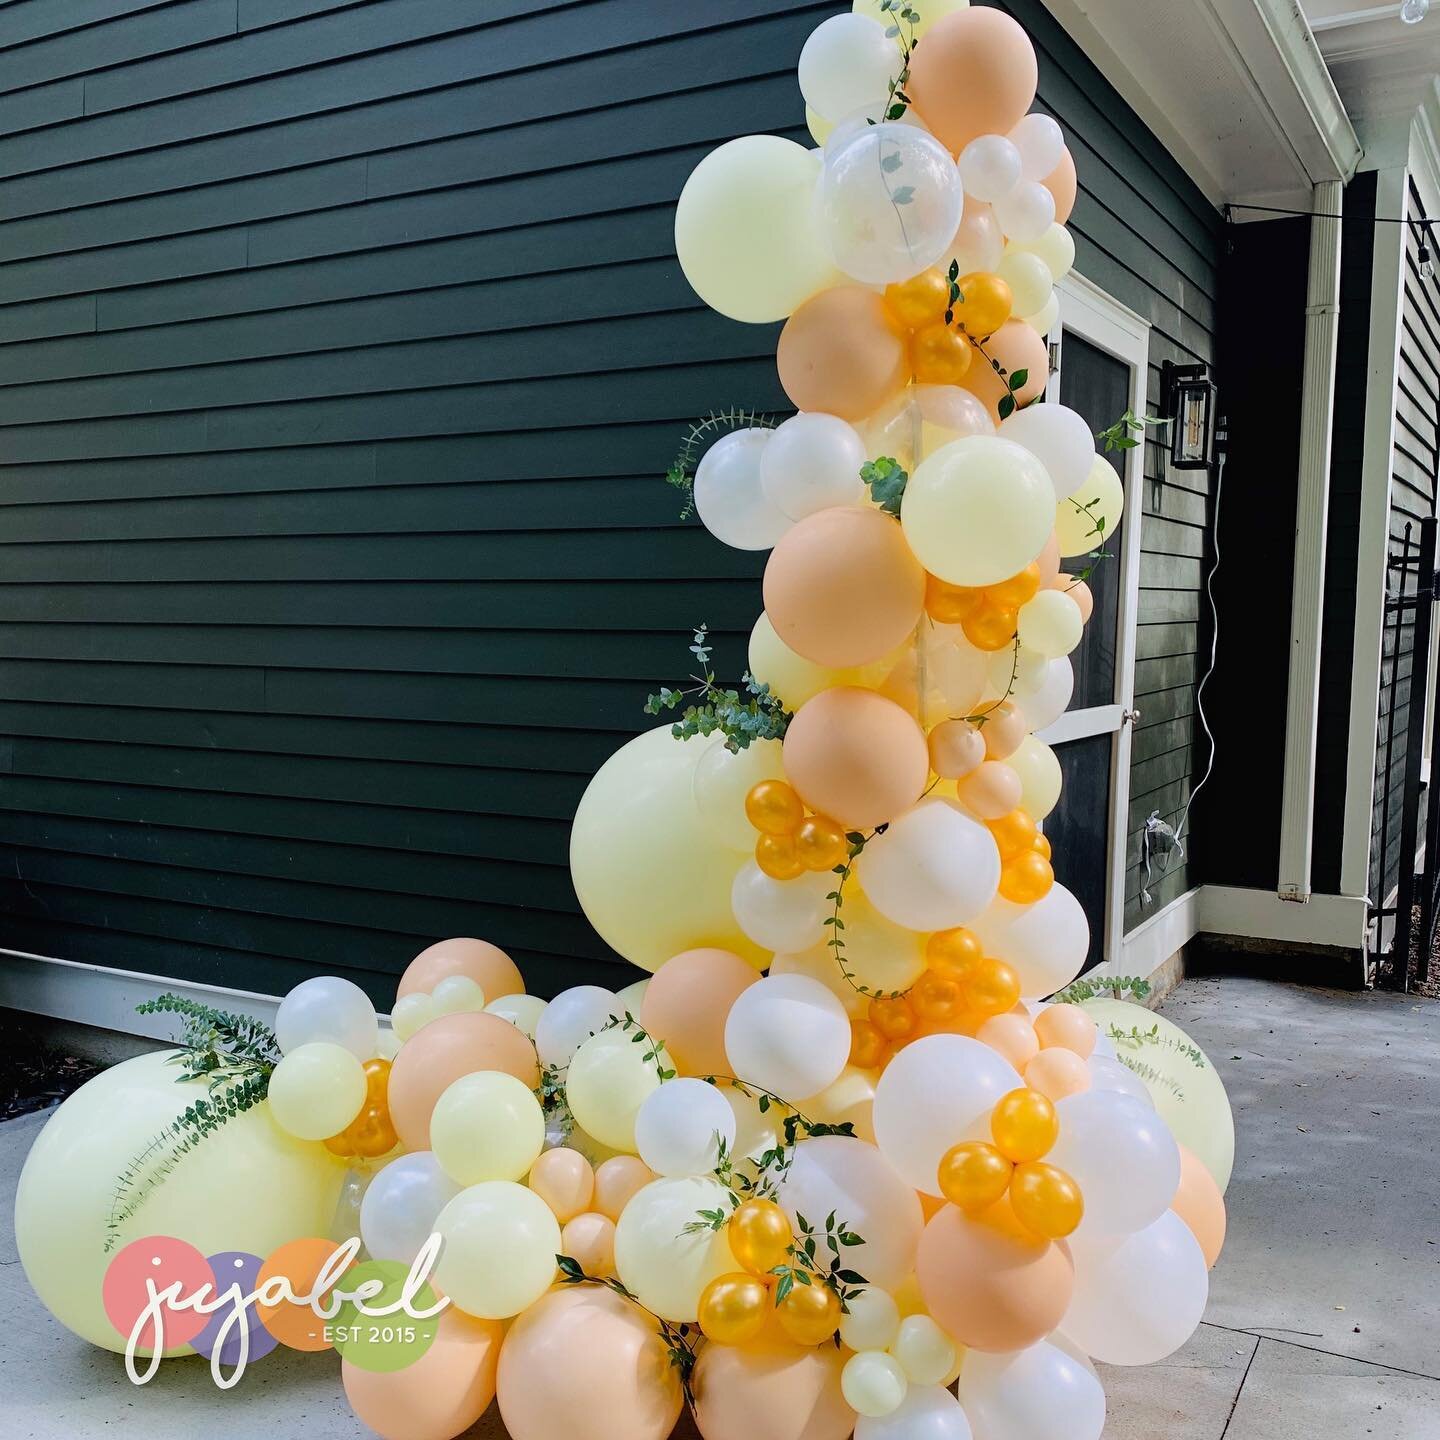 Our organic balloon garland gave this backyard wedding all the feels 🥰🥰🥰

#wedding #backyardwedding #balloons #balloonarch #weddingballoons #balloongarland #durhamnc #raleighnc #ncevents #jujabel